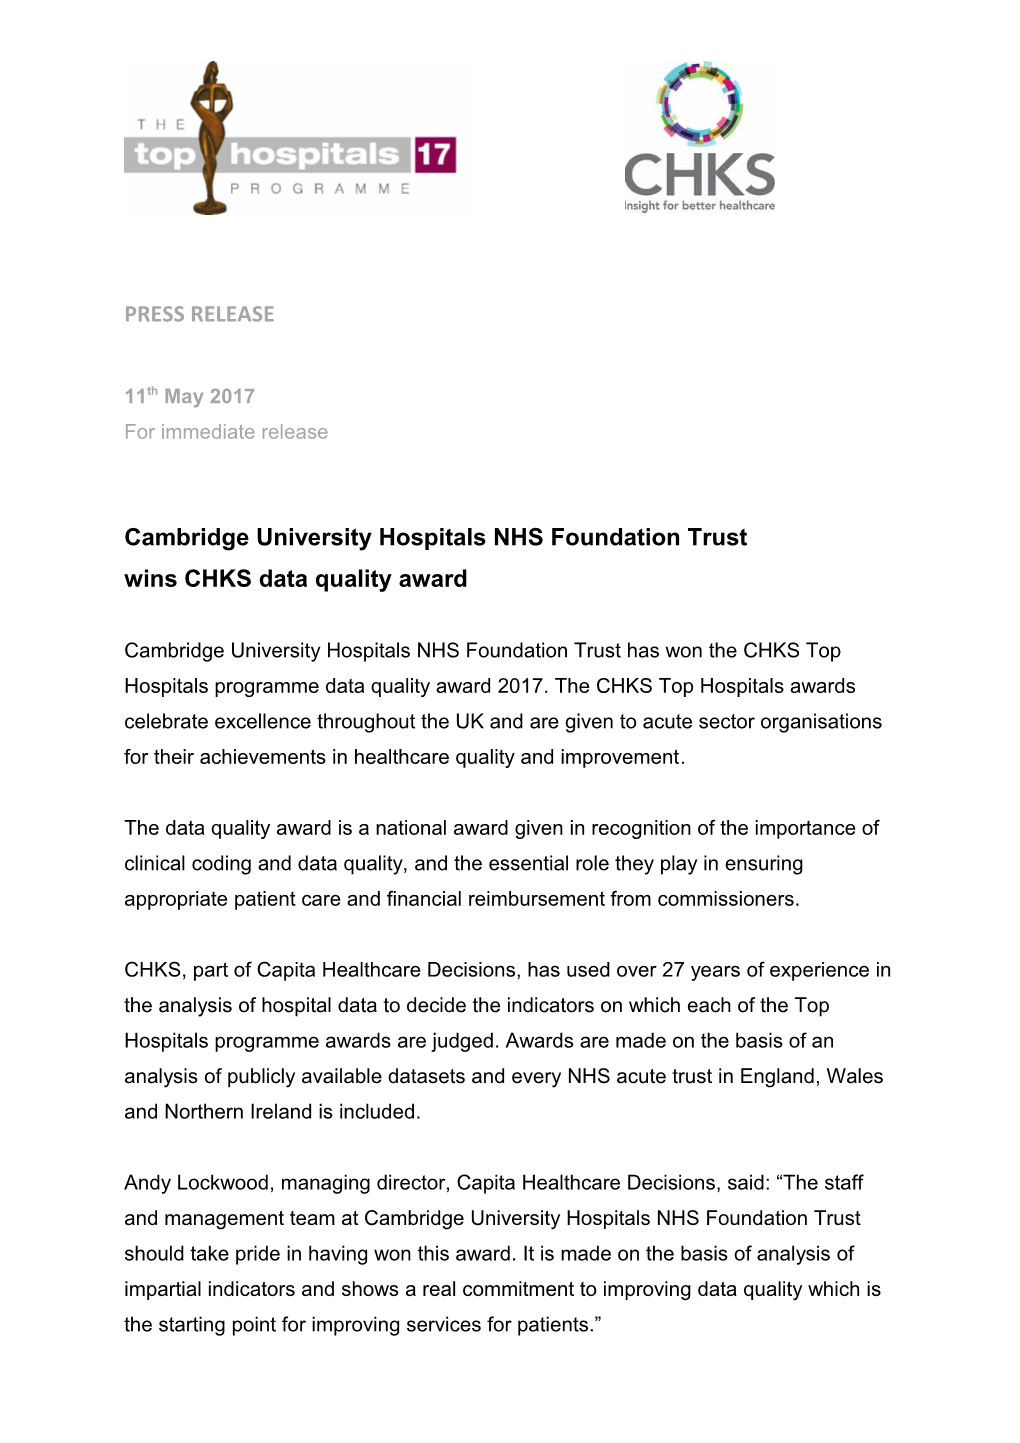 Cambridge University Hospitals NHS Foundation Trust Wins CHKS Data Quality Award